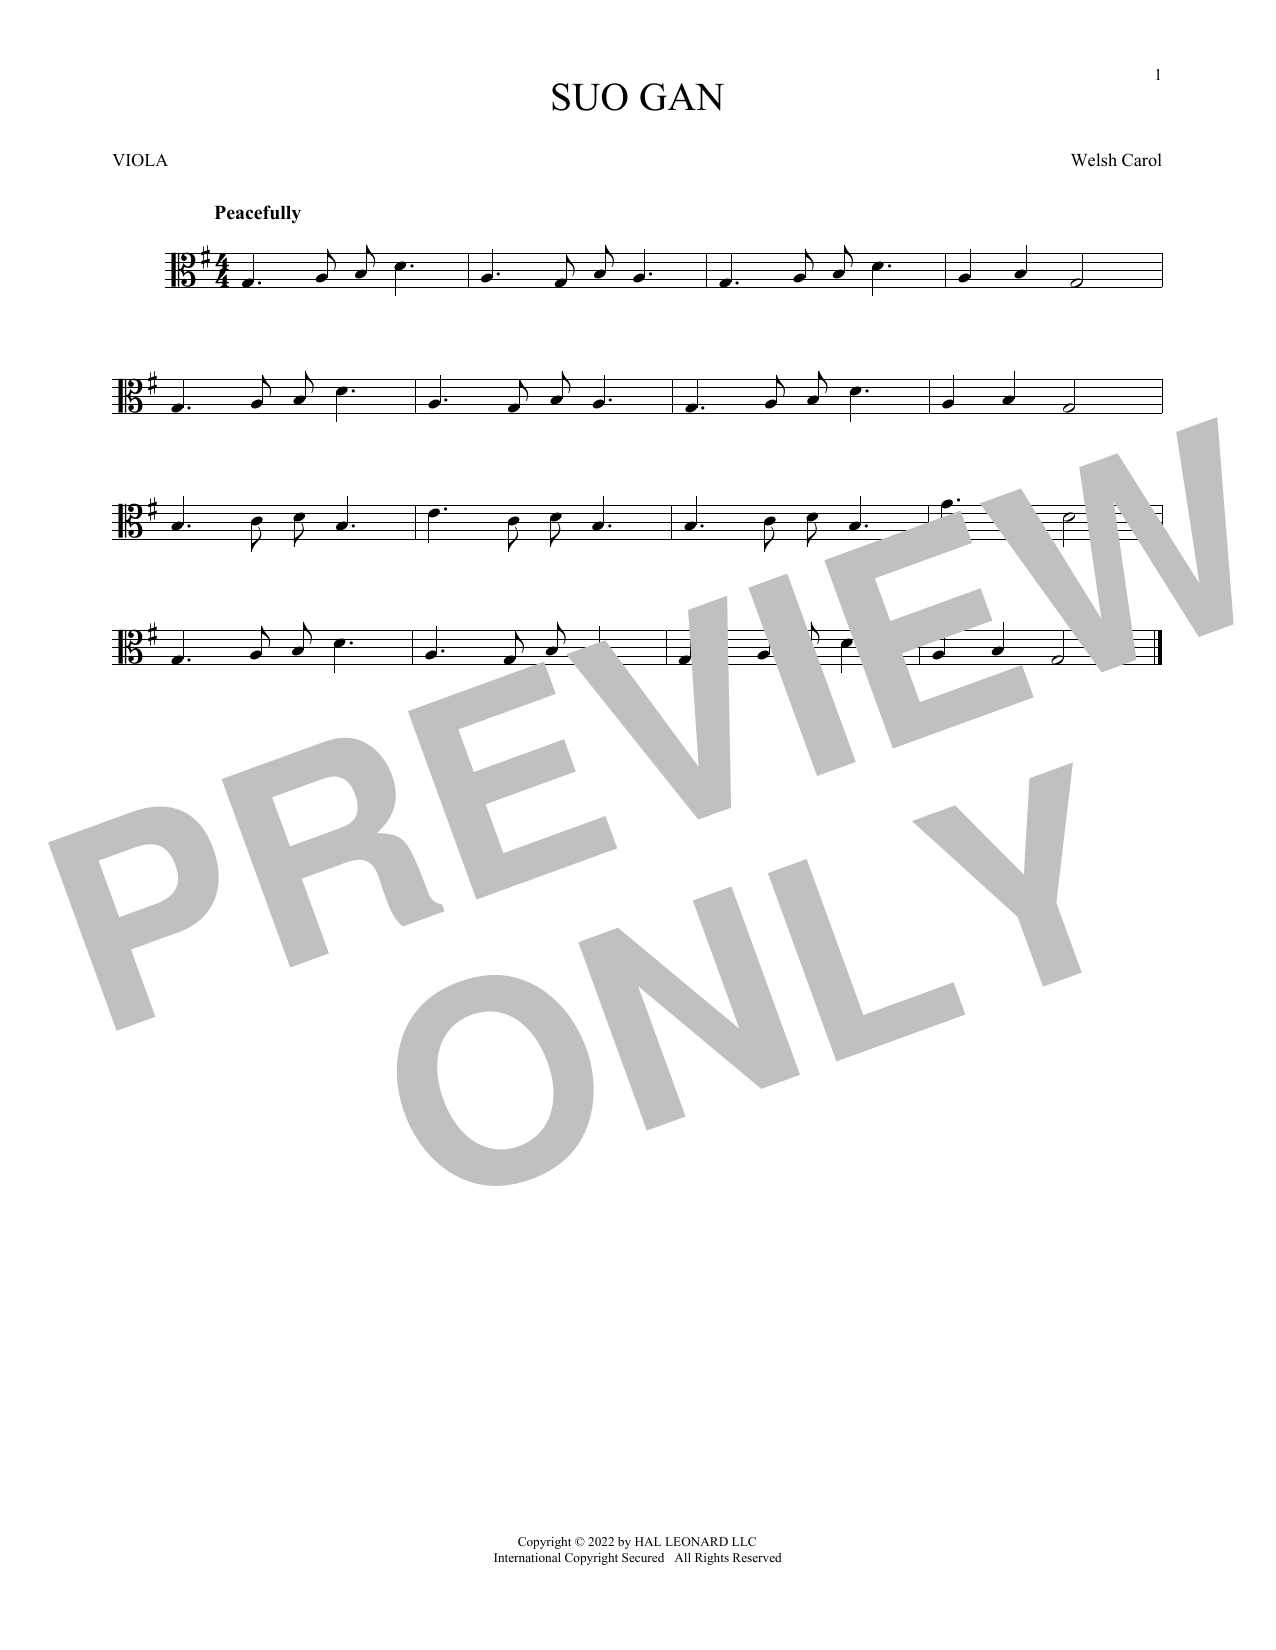 Welsh carol Suo Gan Sheet Music Notes & Chords for Violin Solo - Download or Print PDF